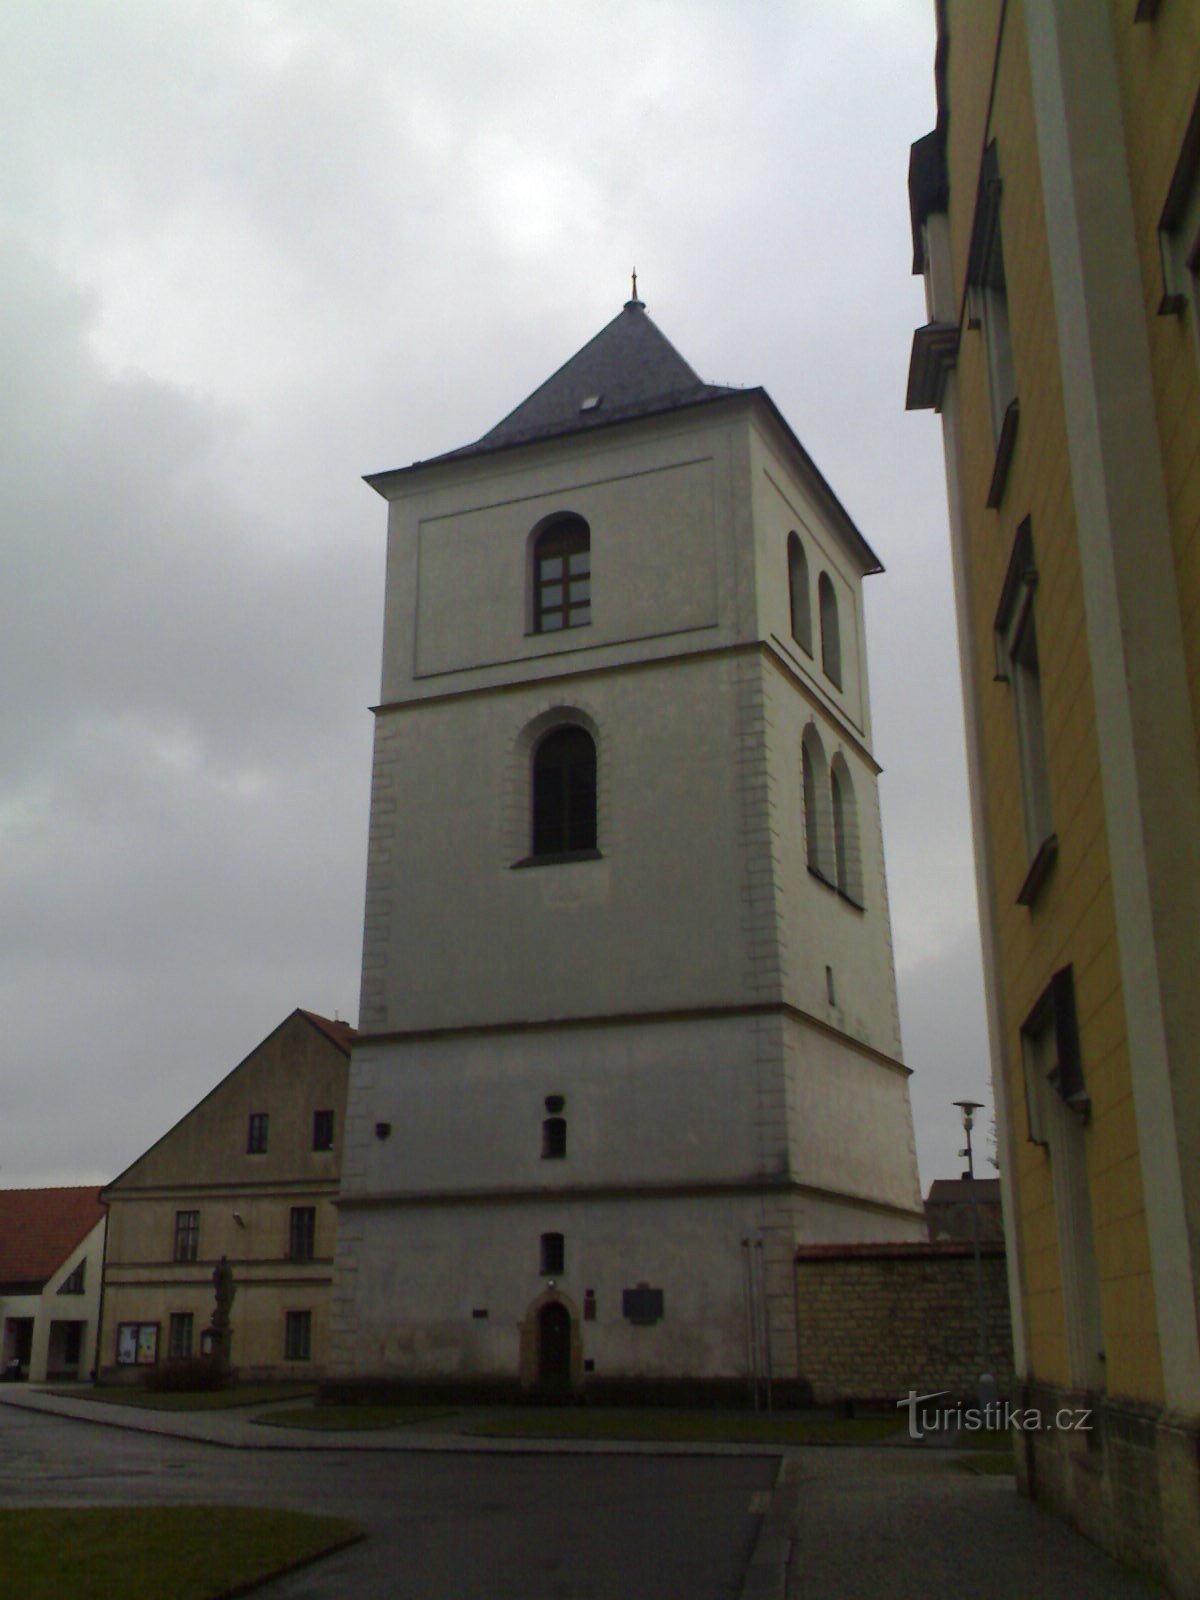 Zvonice - bygalleri I Zvonice